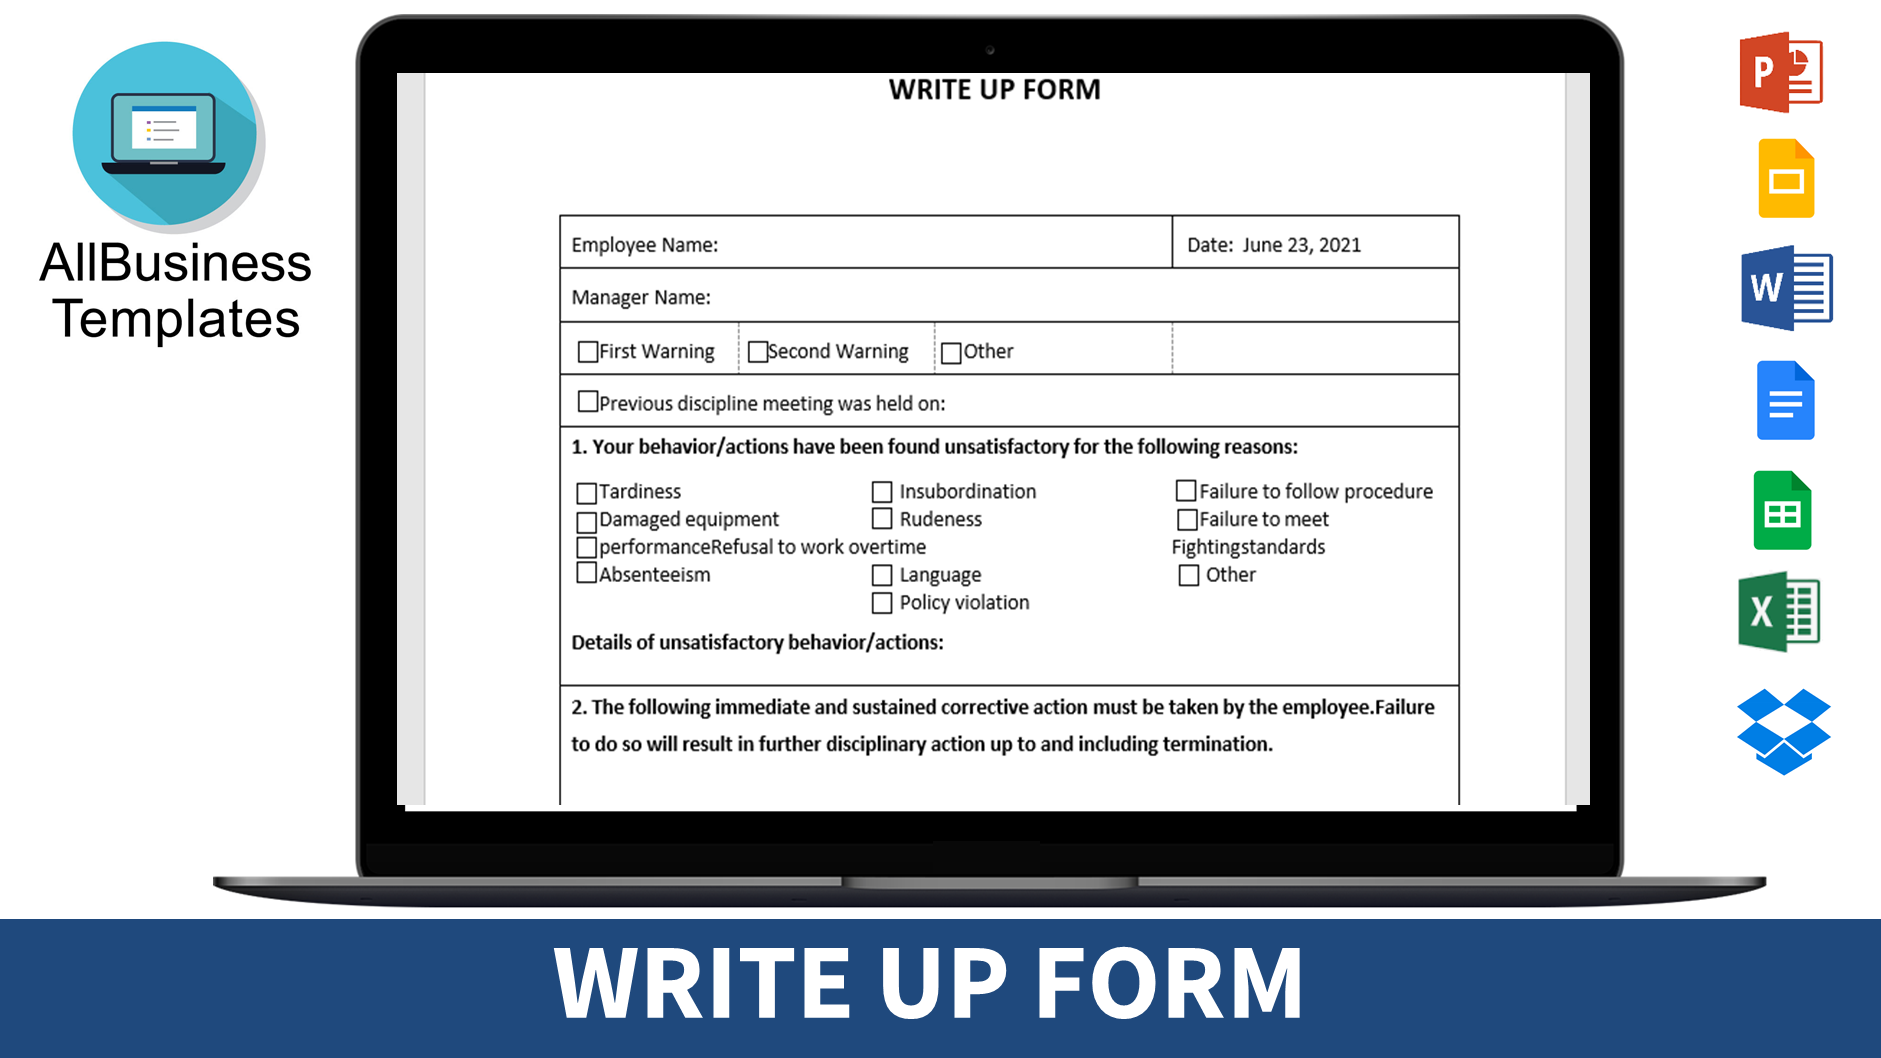 Write Up Form main image